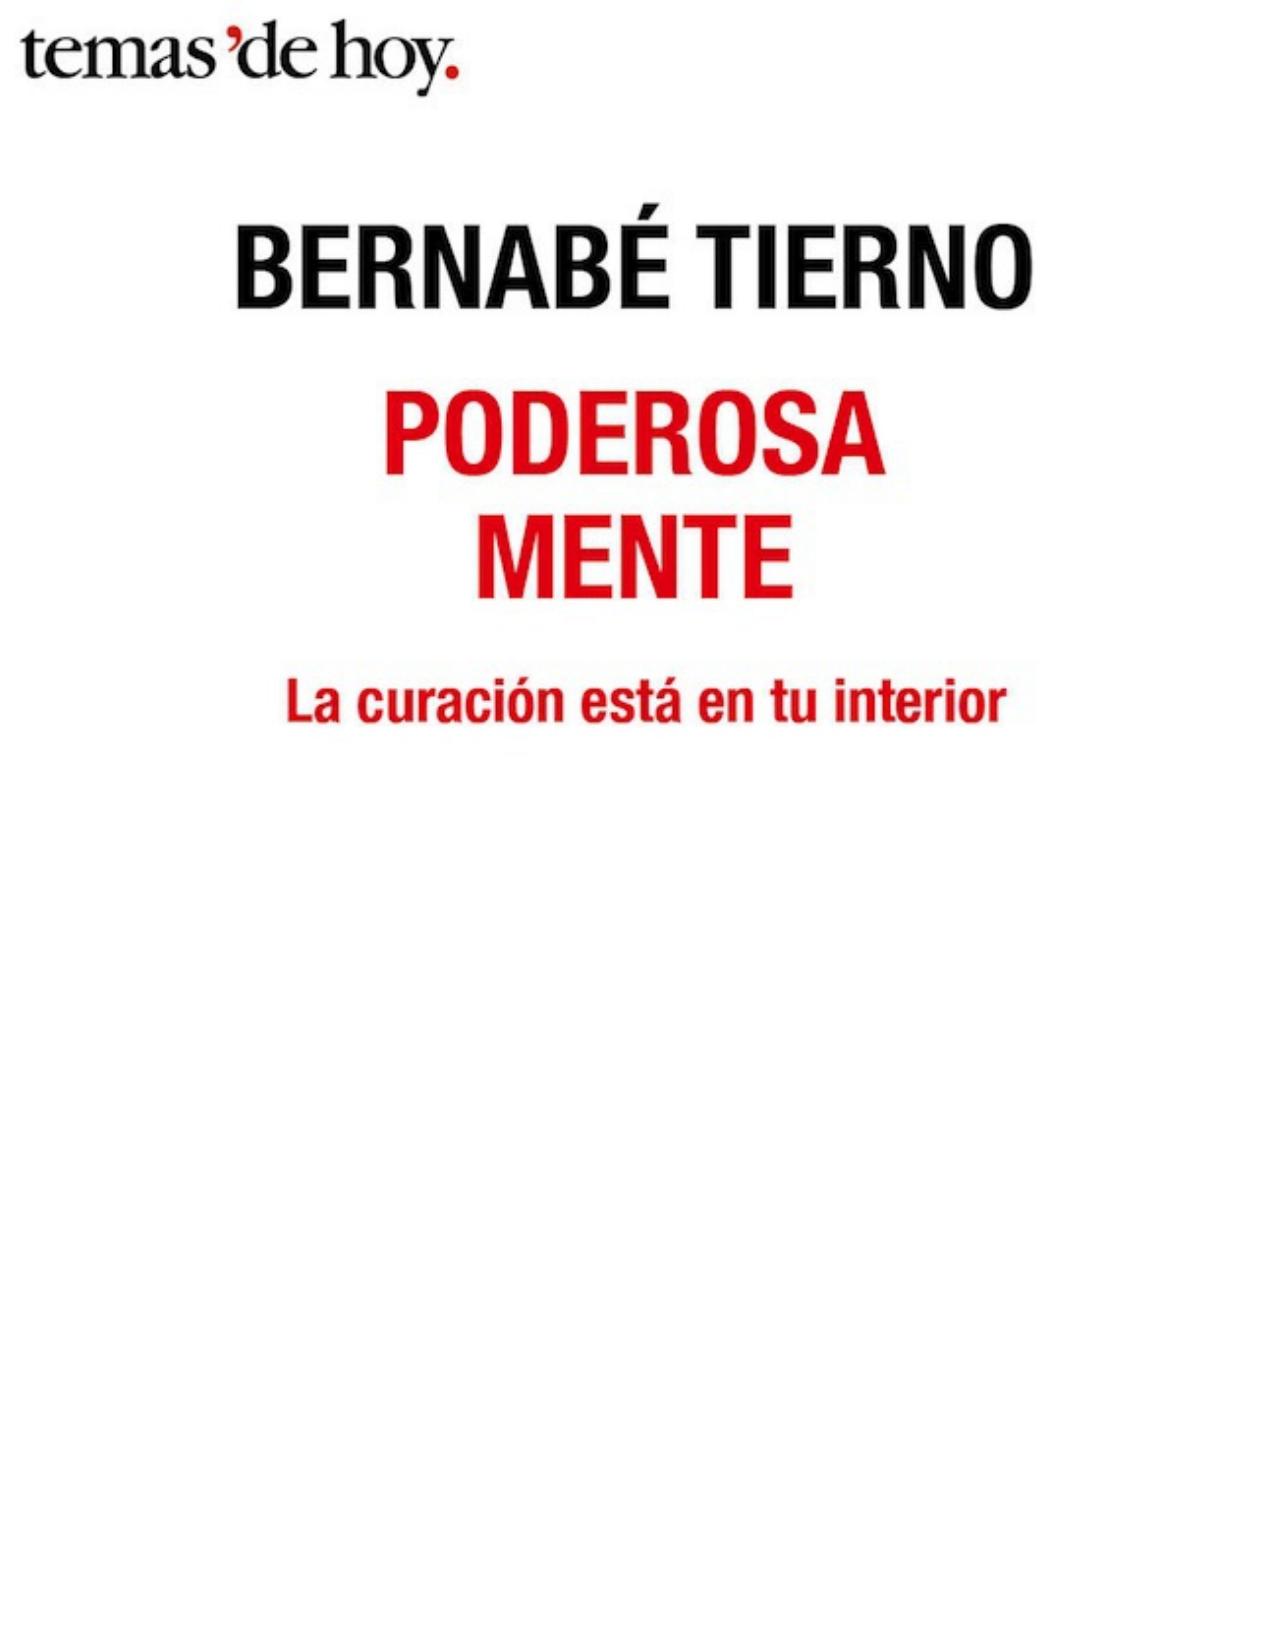 Poderosa mente (Spanish Edition)